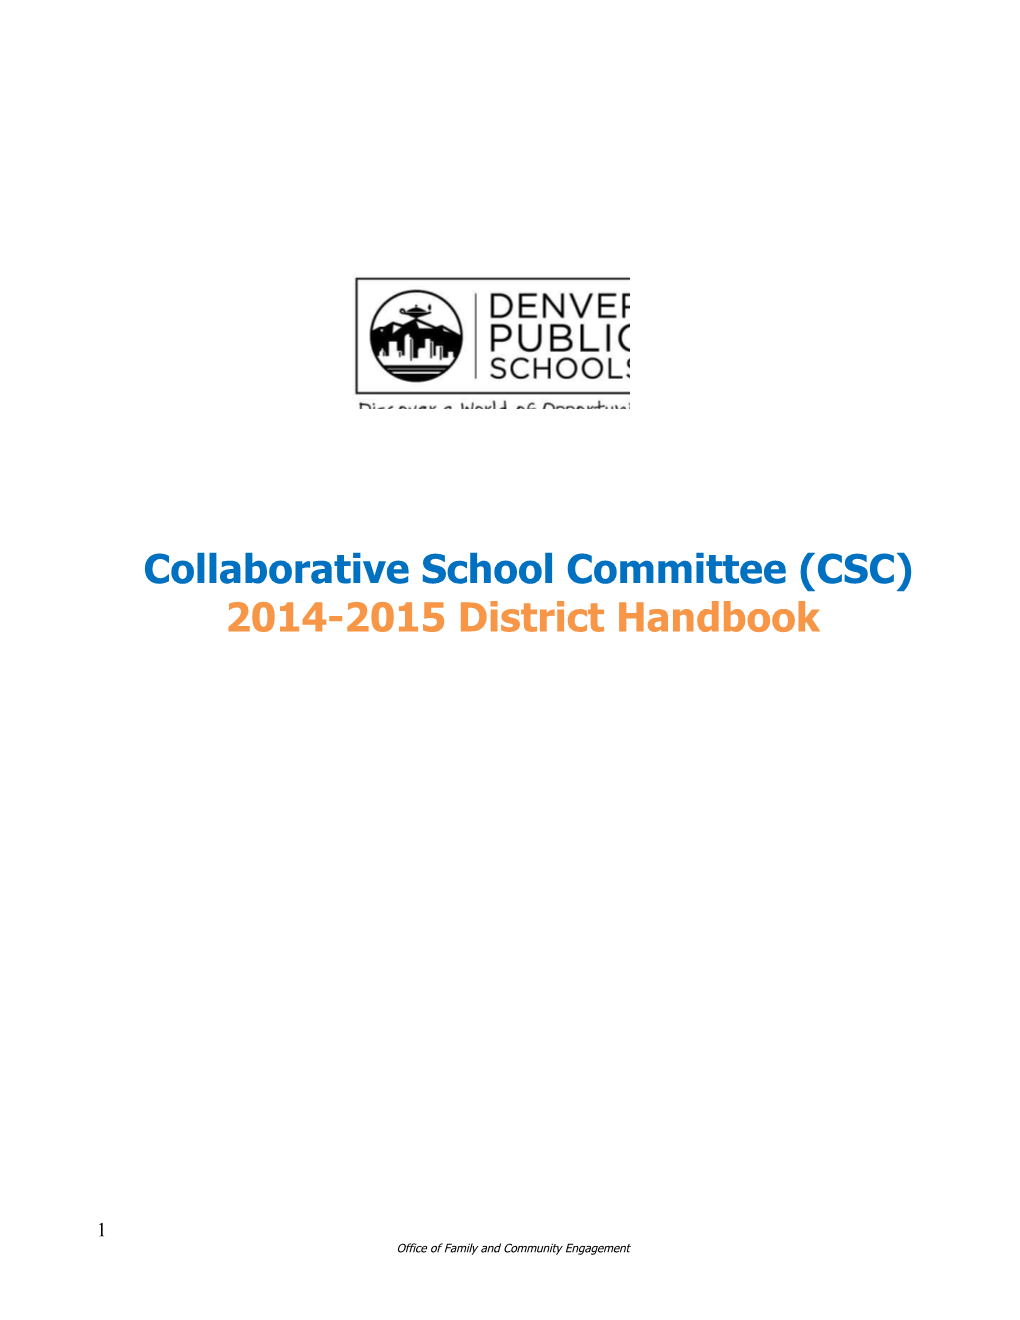 CSC District Handbook